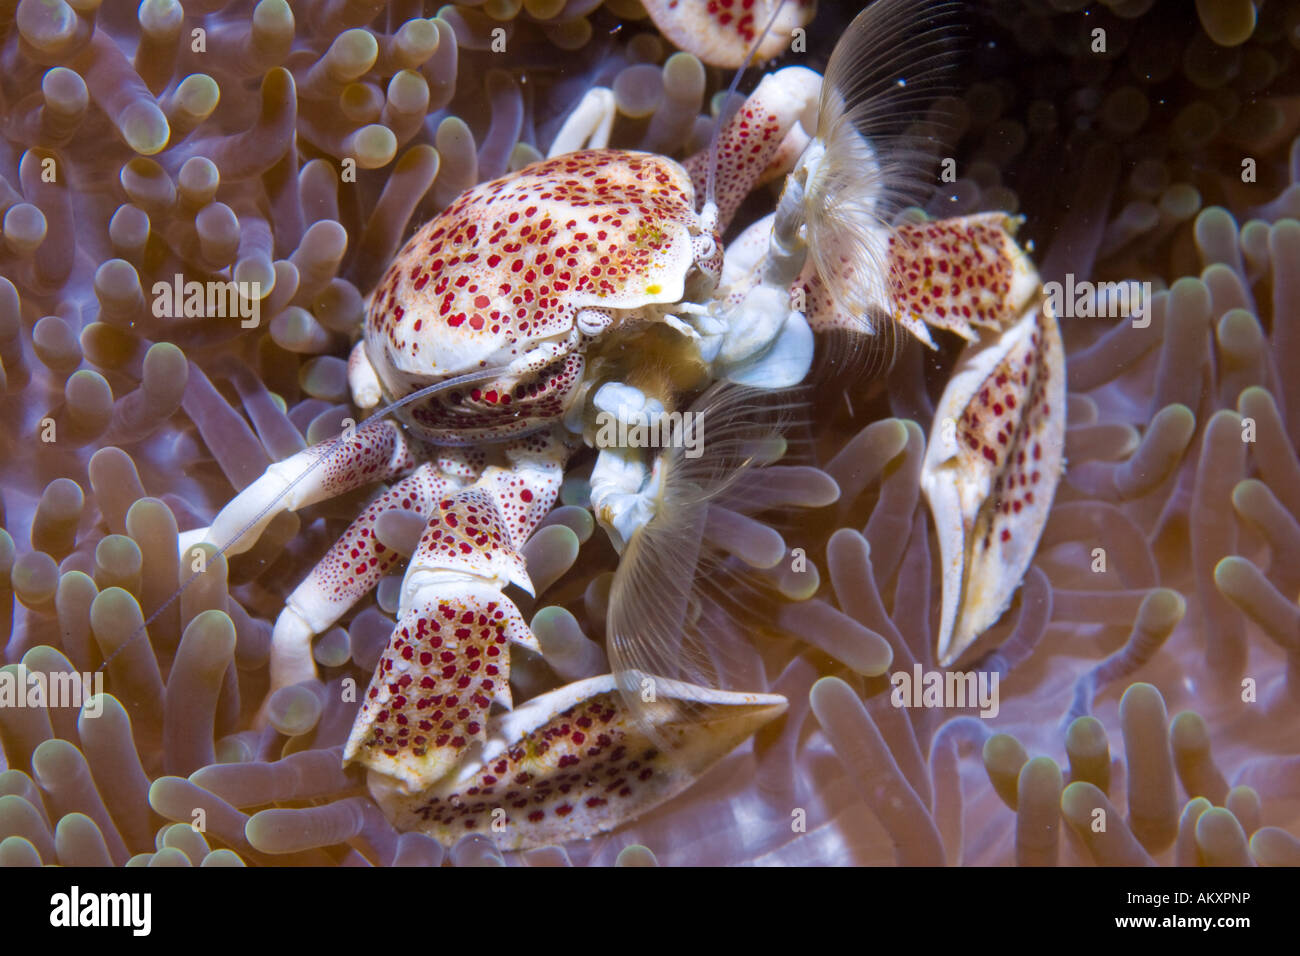 Dotted Anemone Crab (Neopetrolisthes maculatus), Indonesiea. Stock Photo